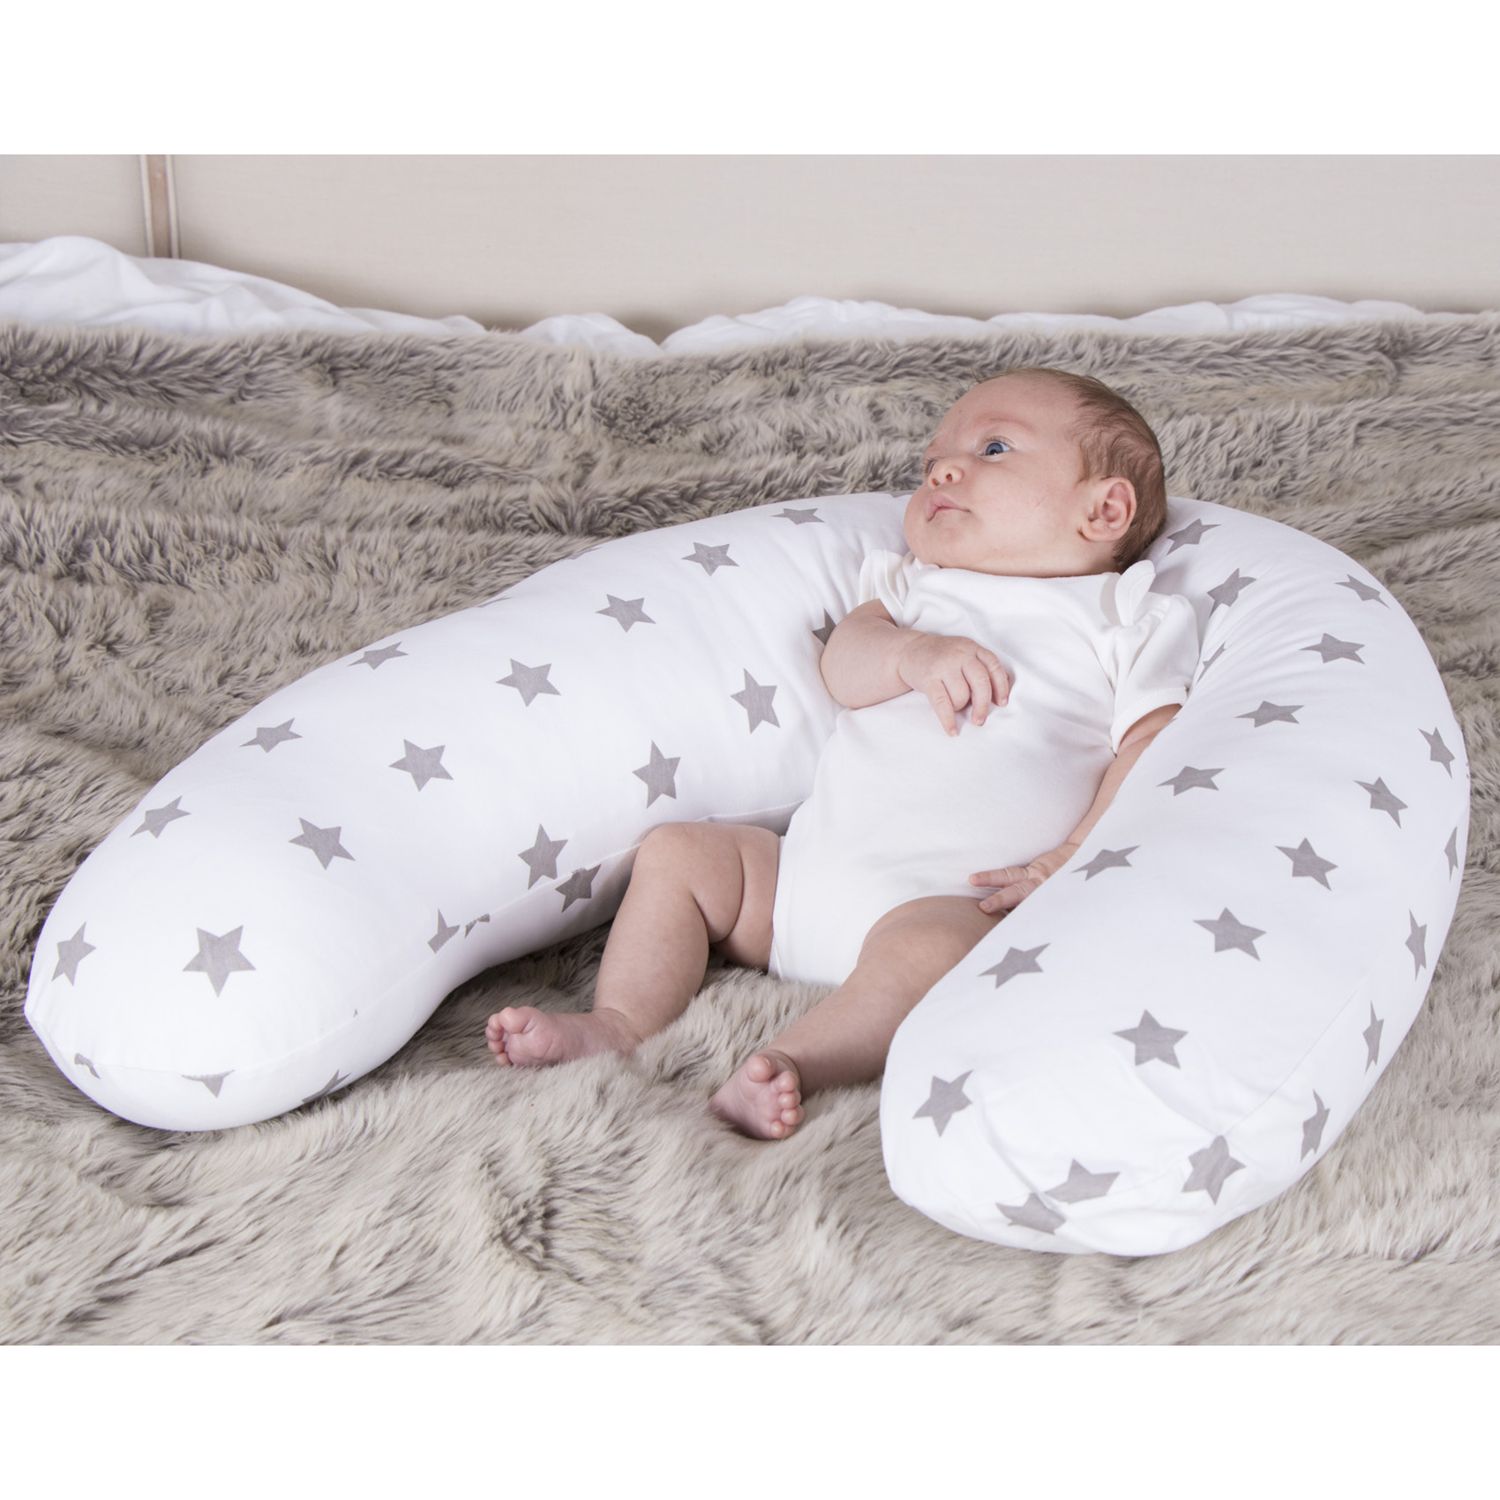 cushion for pregnant ladies